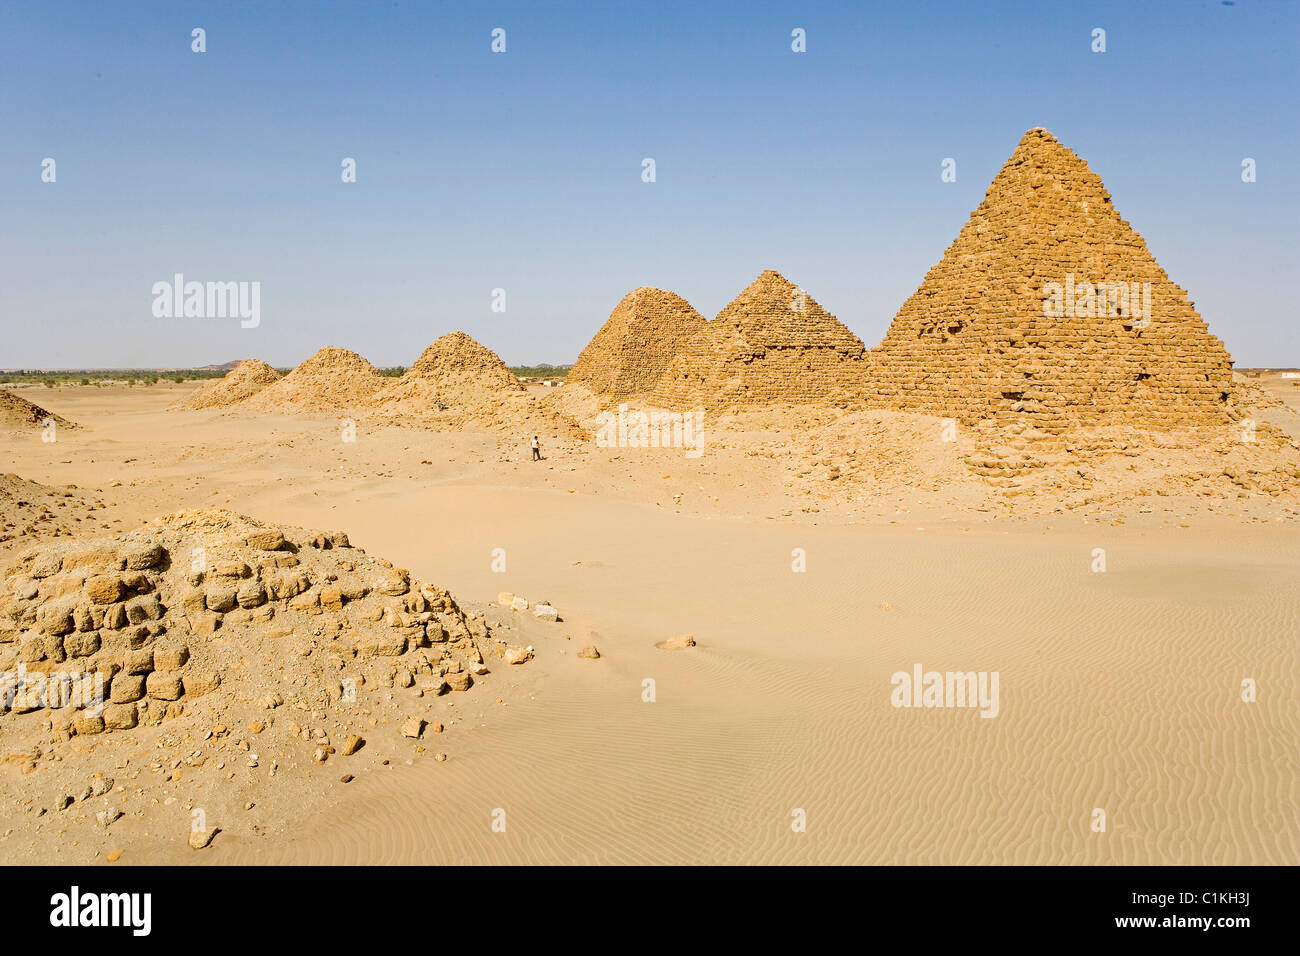 Sudan High Nubia province of Ash Shamaliya desert of Baiyuda (east Sahara) Nuri archaeological site pyramids used as tombs for Stock Photo